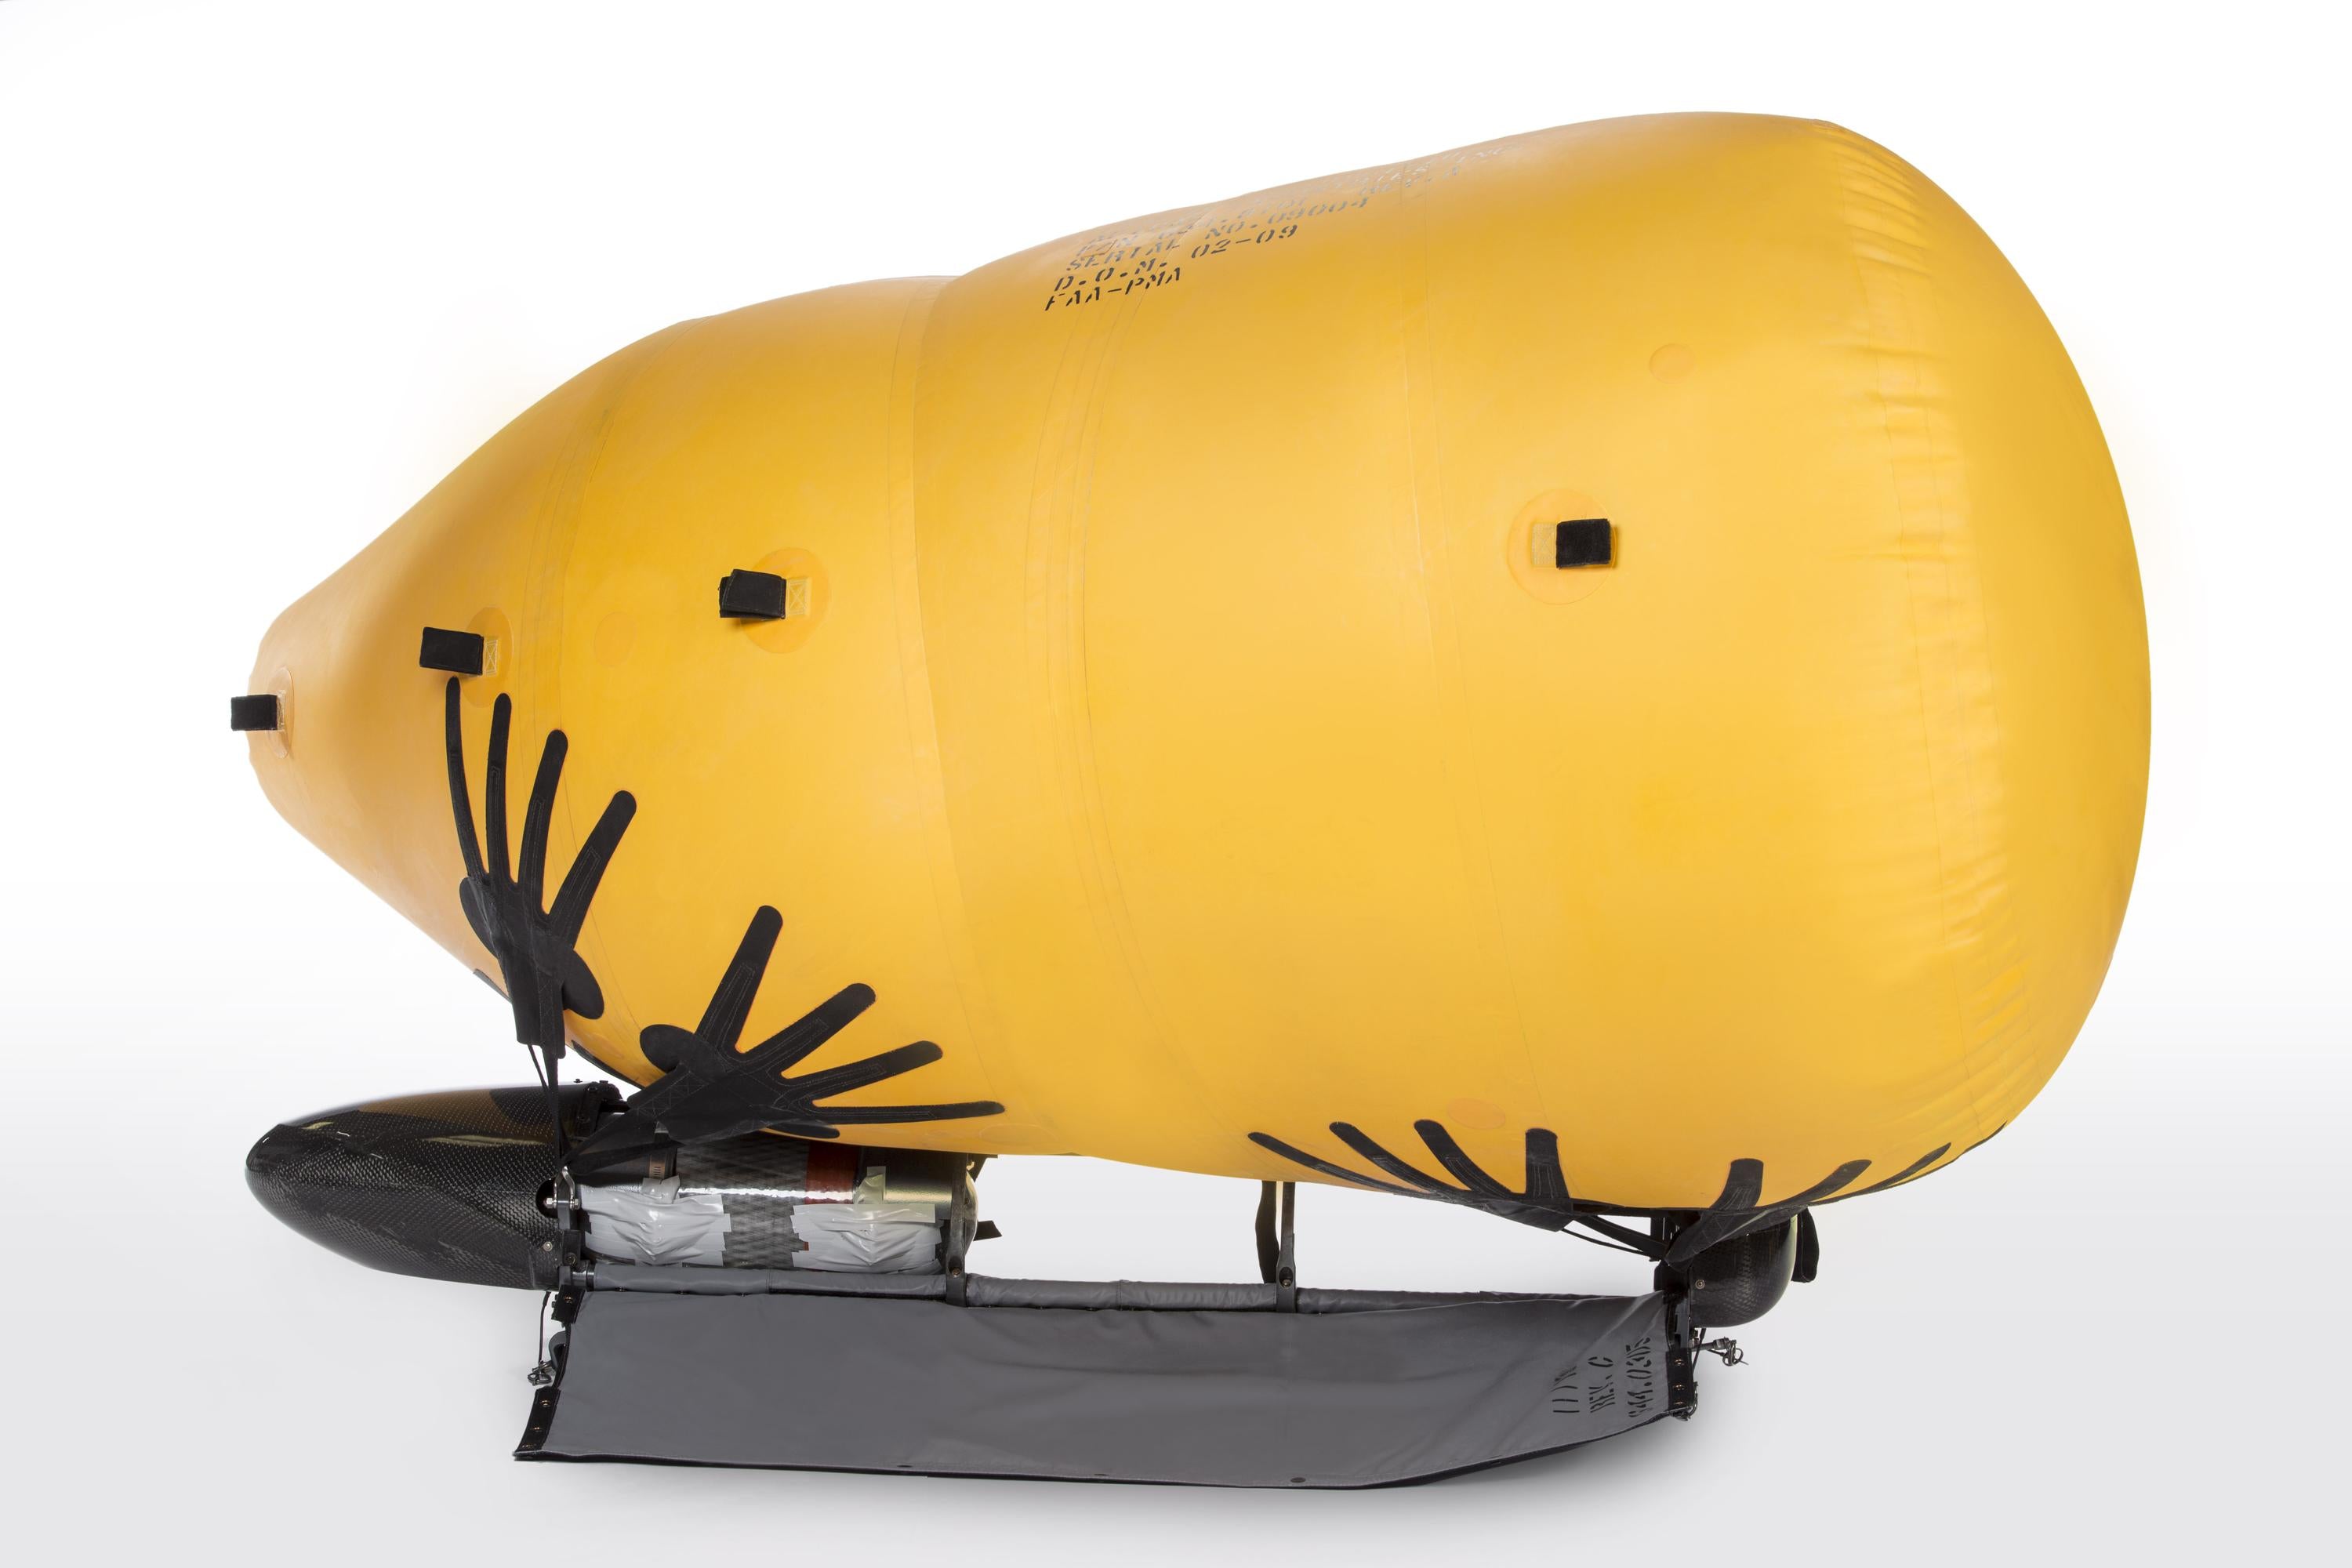 AW109SP emergency float system 